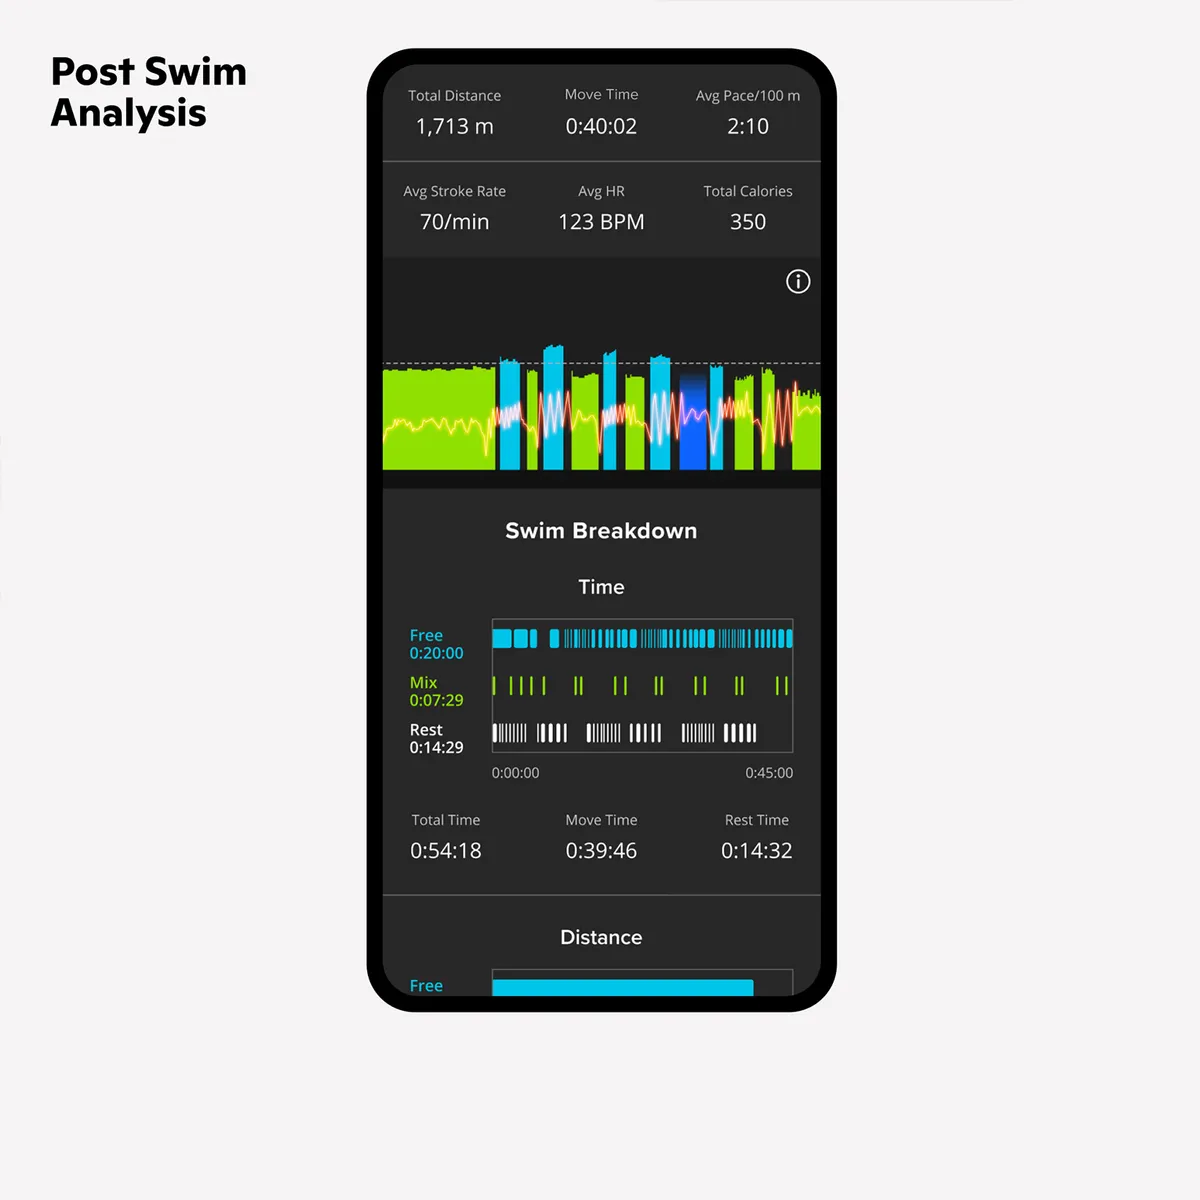 Form post-swim analysis in app